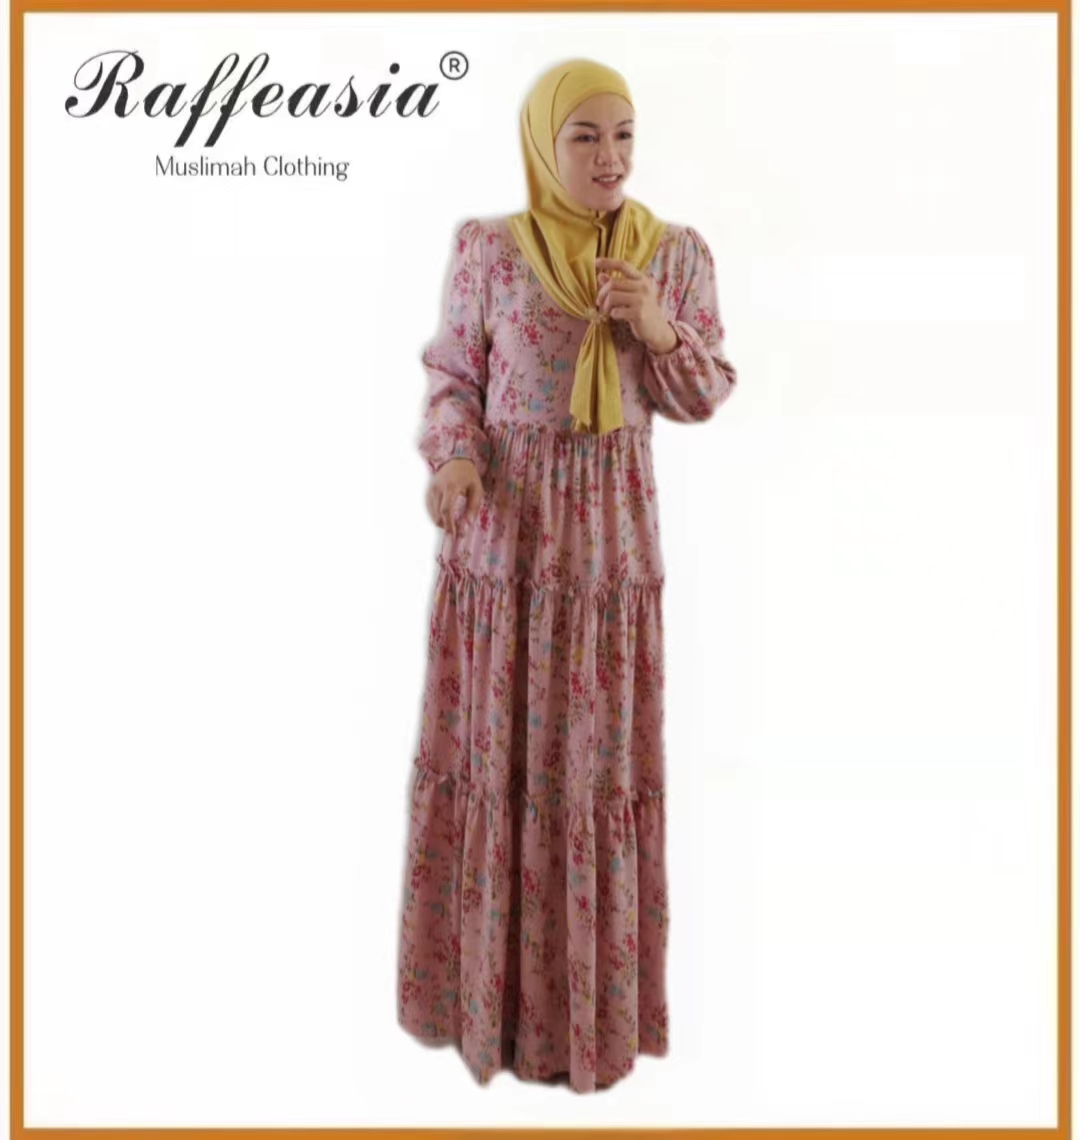 Raffeasia Dress Muslimah Floral Design 3 Layer Ready Stock